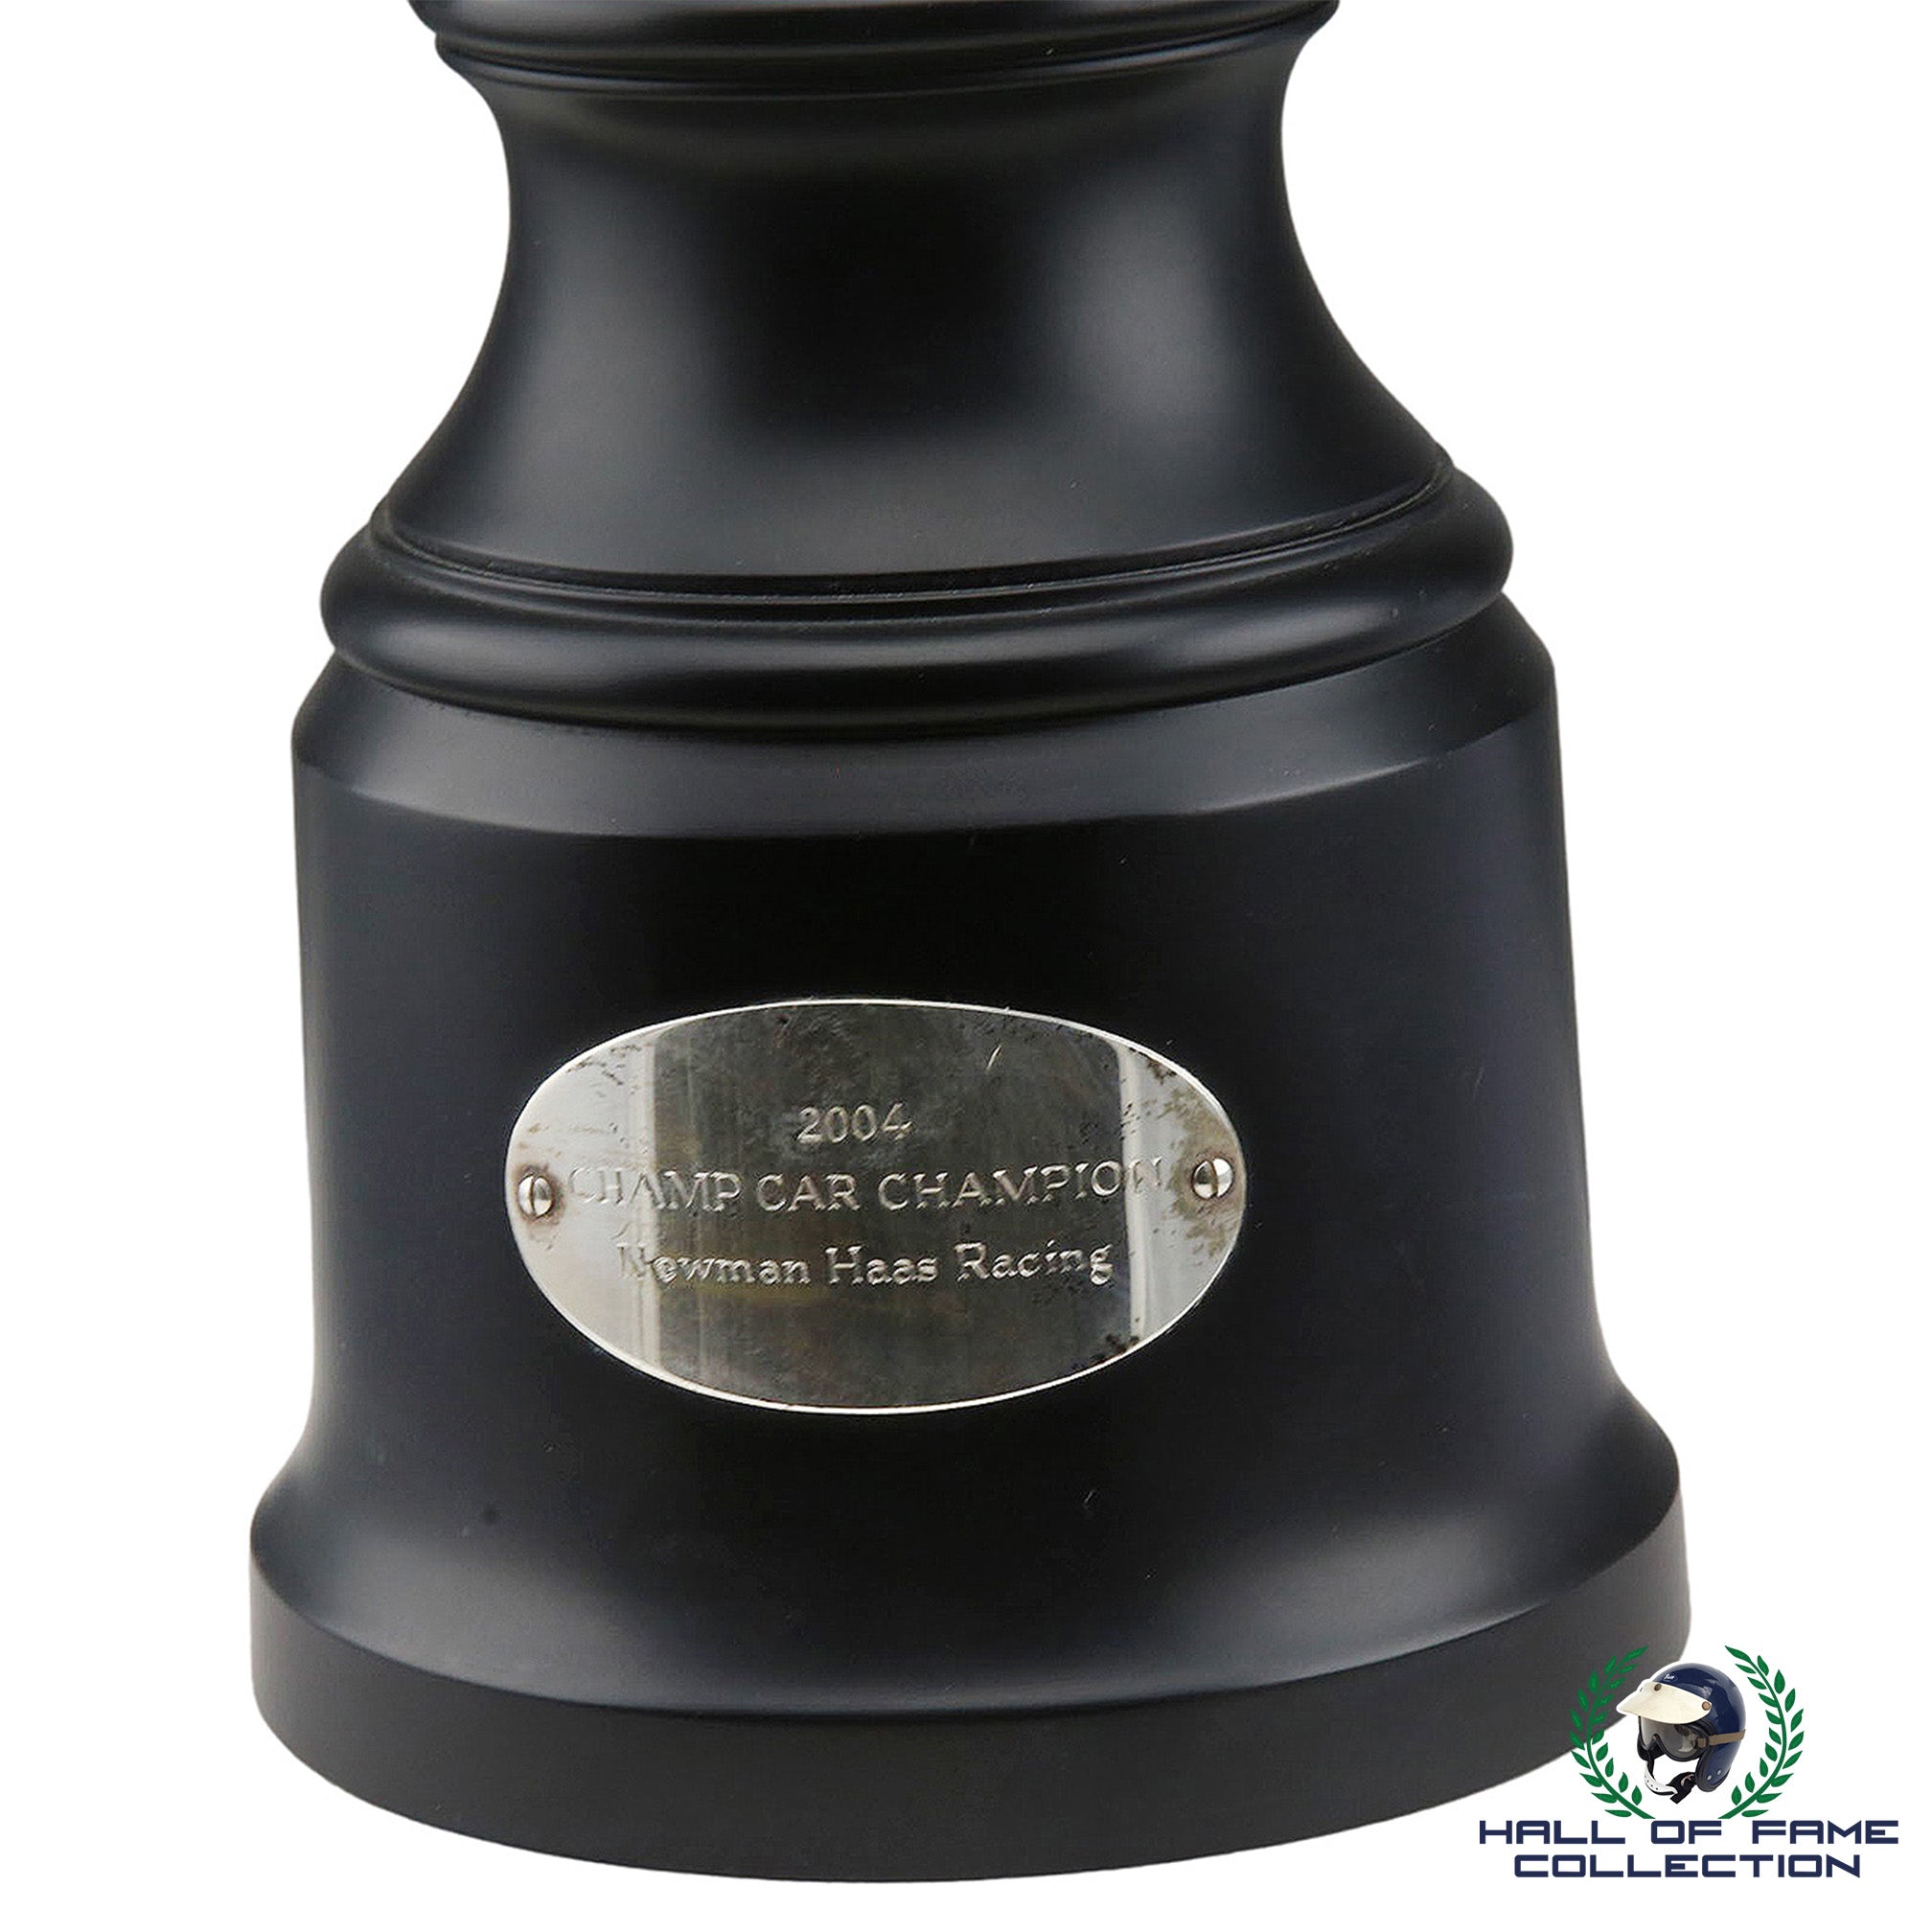 2004 Sebastien Bourdais Original Vanderbilt Cup CART Championship Trophy